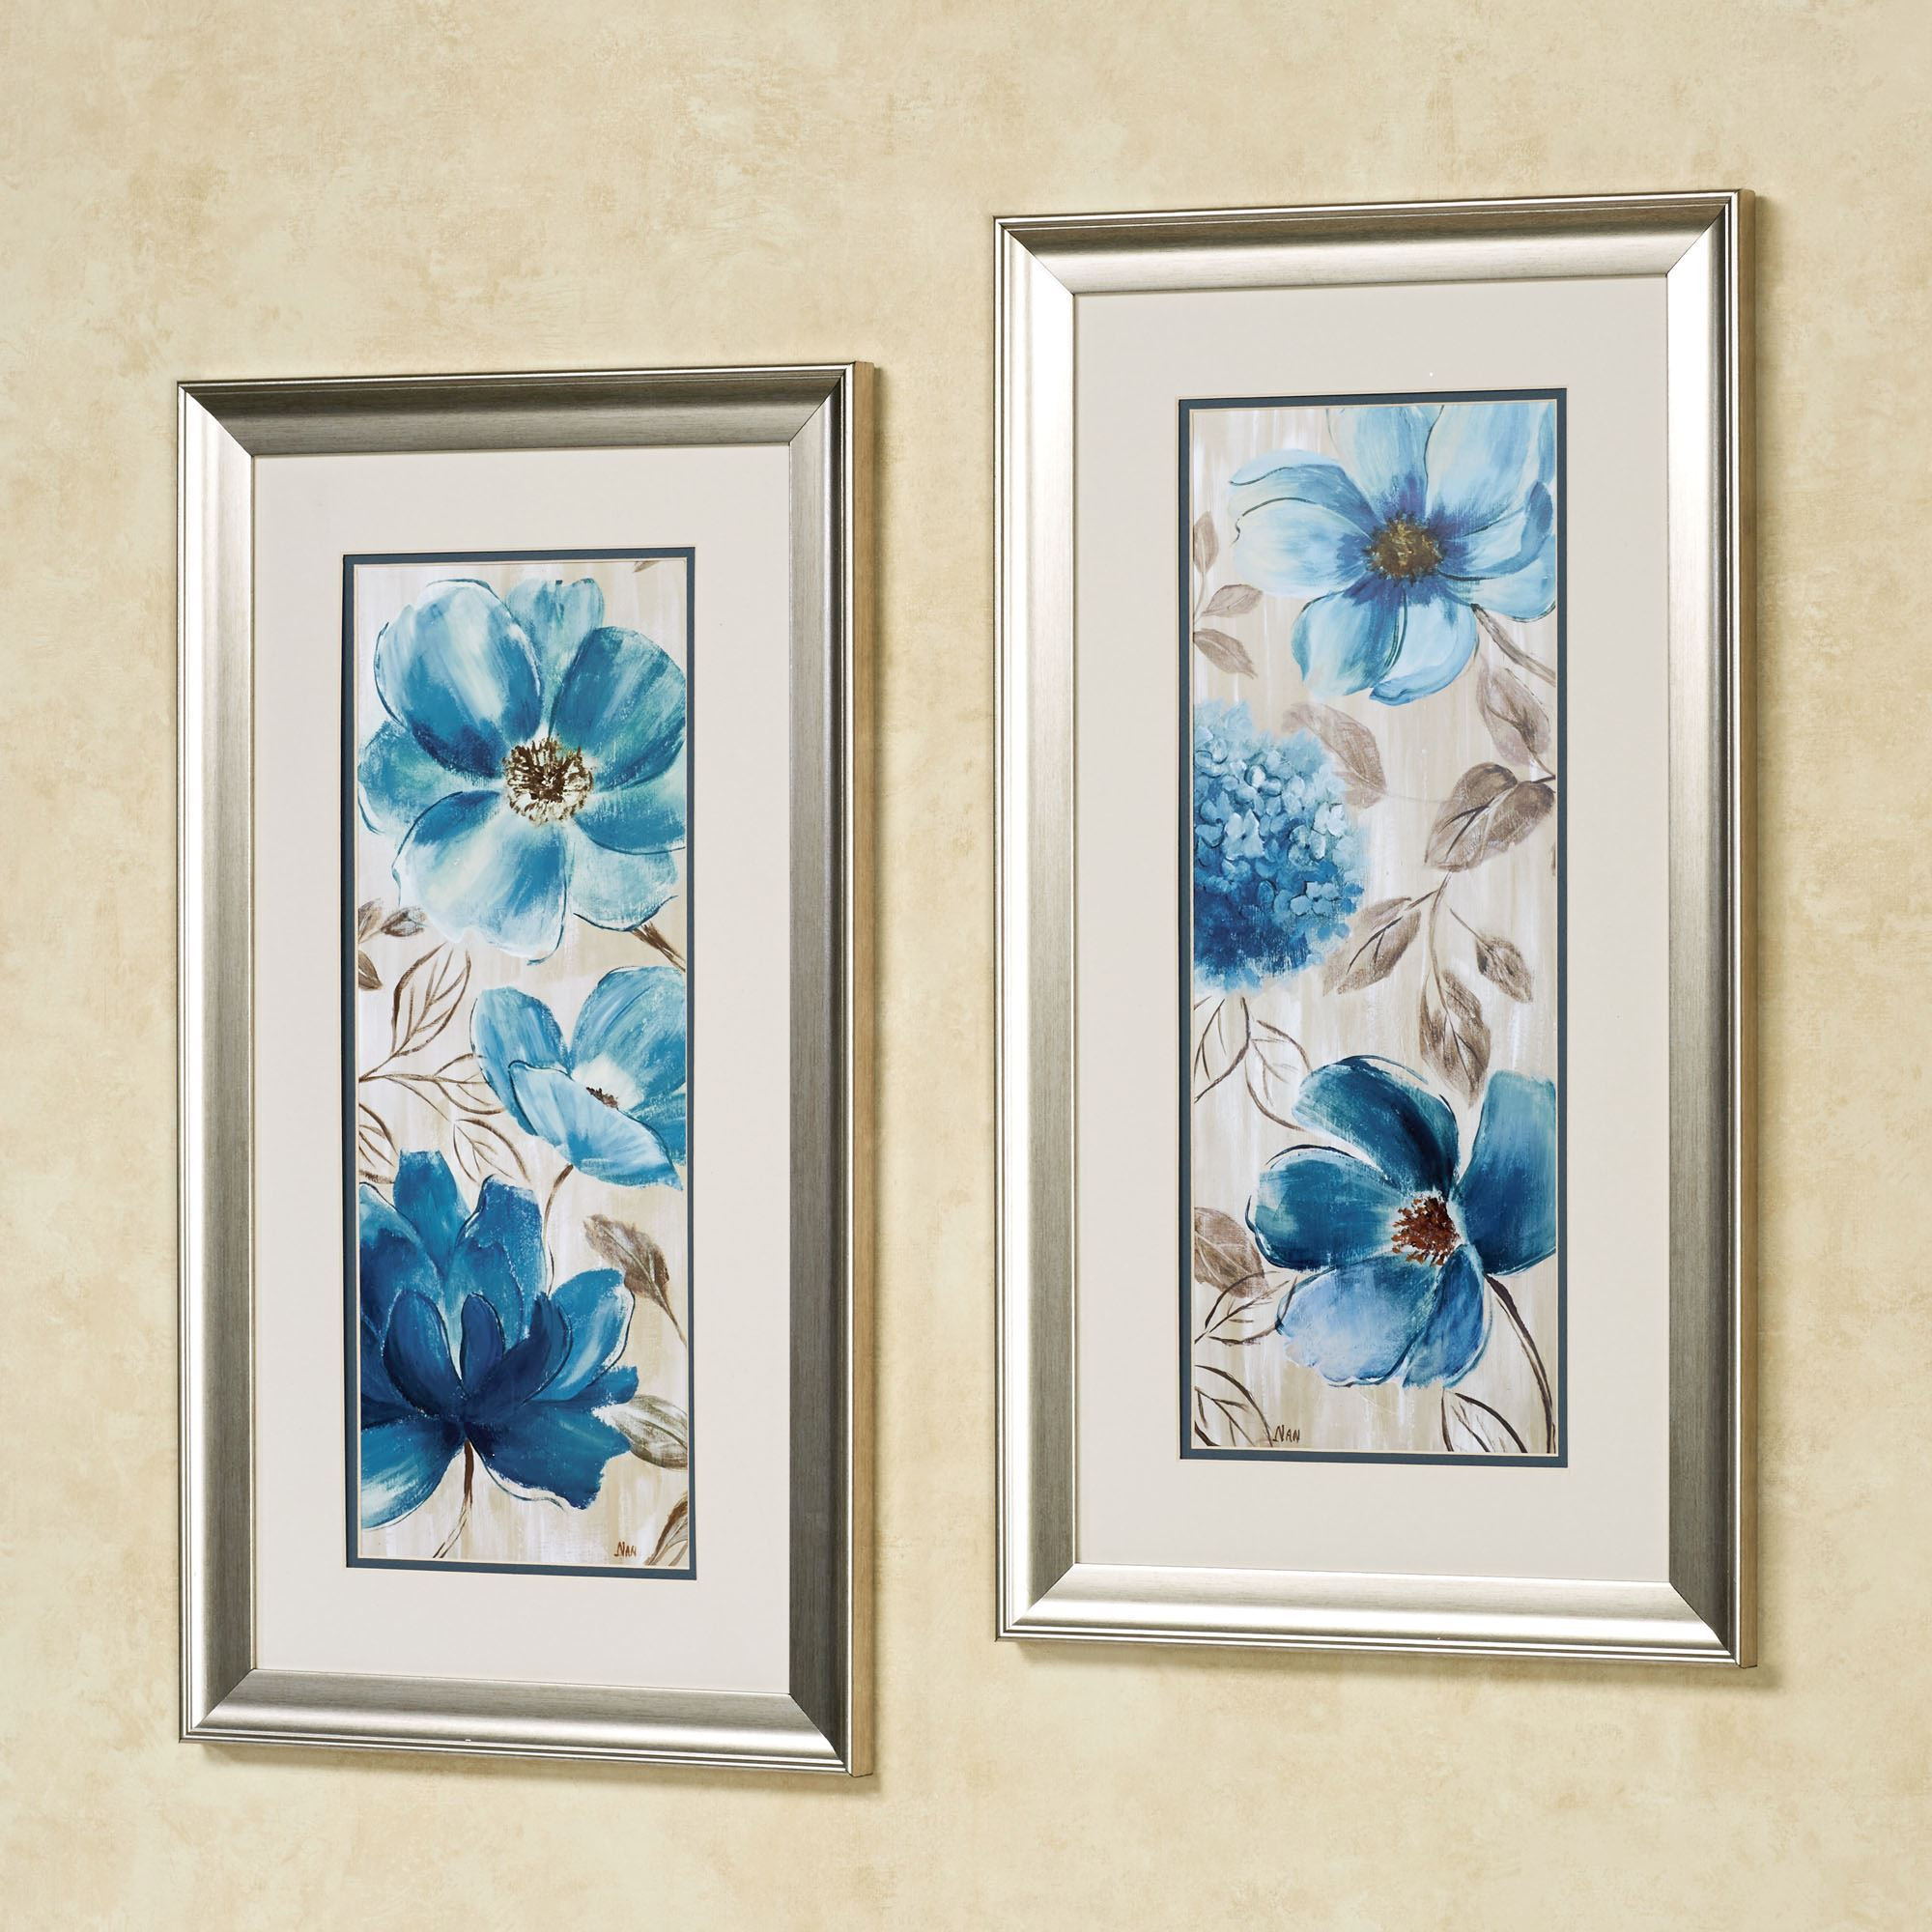 Best ideas about Framed Wall Art
. Save or Pin Blue Garden Floral Framed Wall Art Set Now.